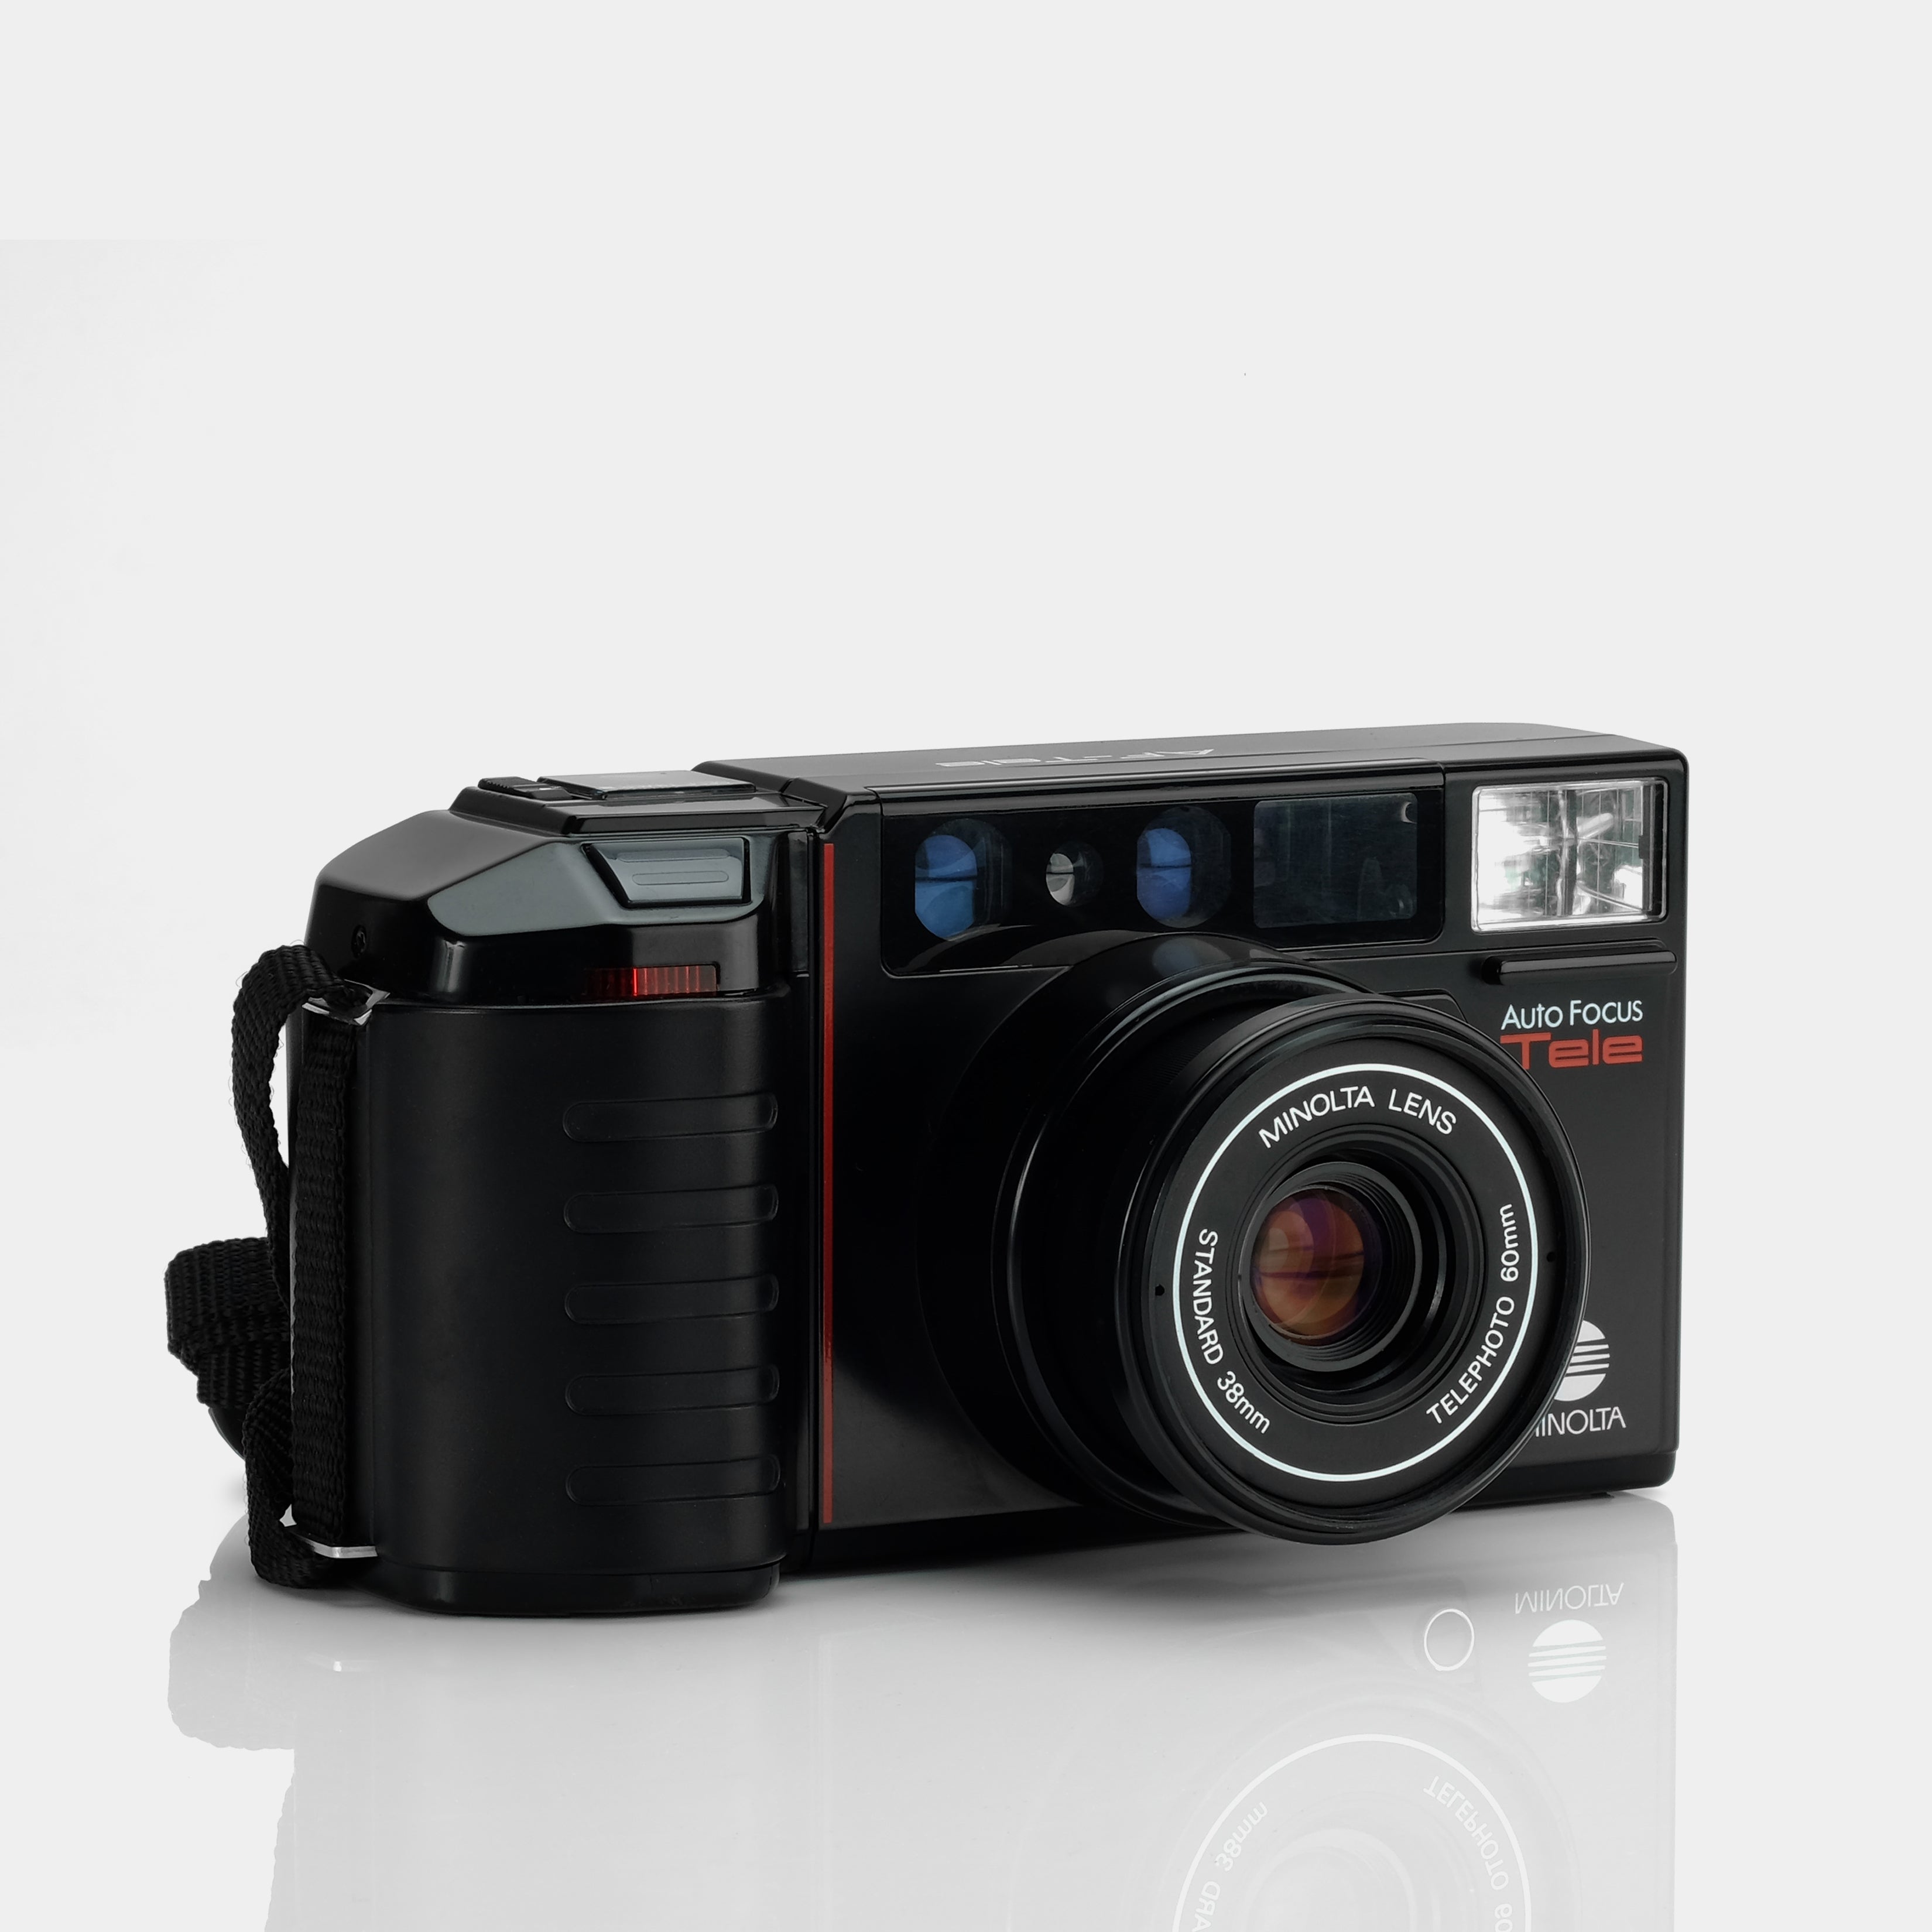 Minolta AF-Tele 35mm Point and Shoot Film Camera